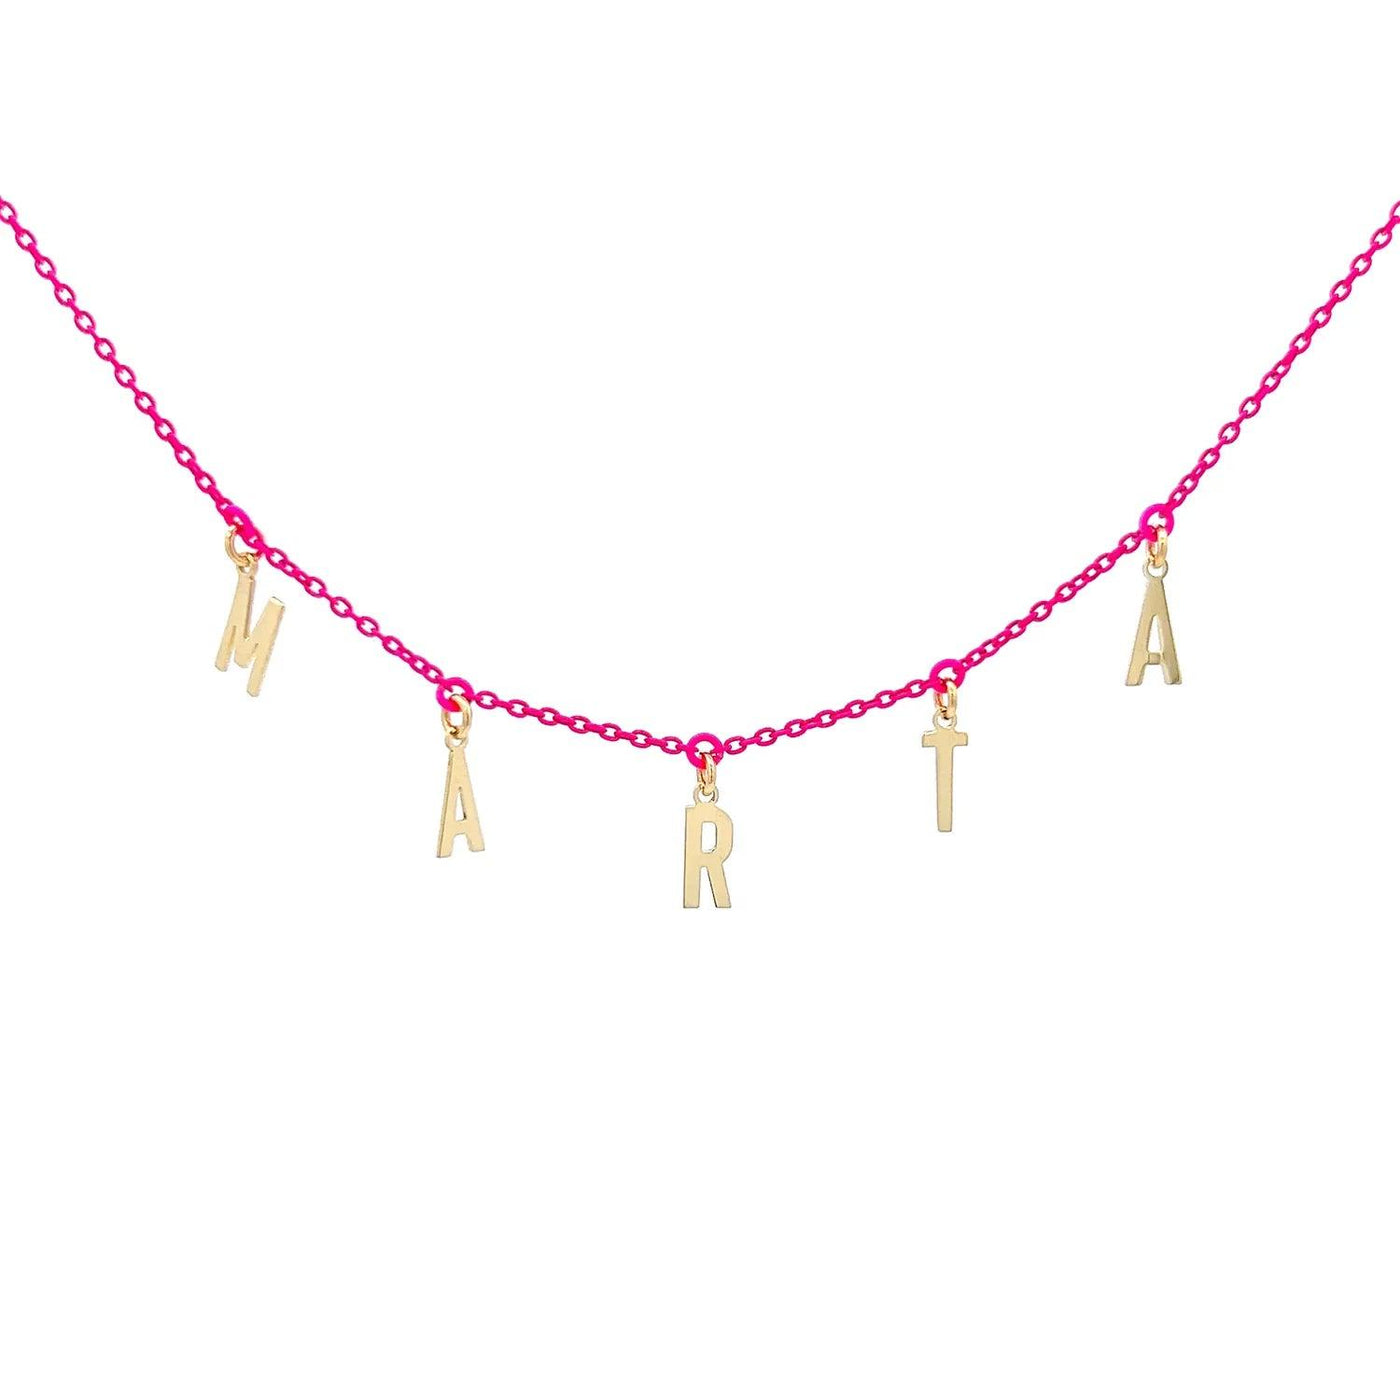 Customizable Fuchsia Choker with Golden Letters - Moregola Fine Jewelry